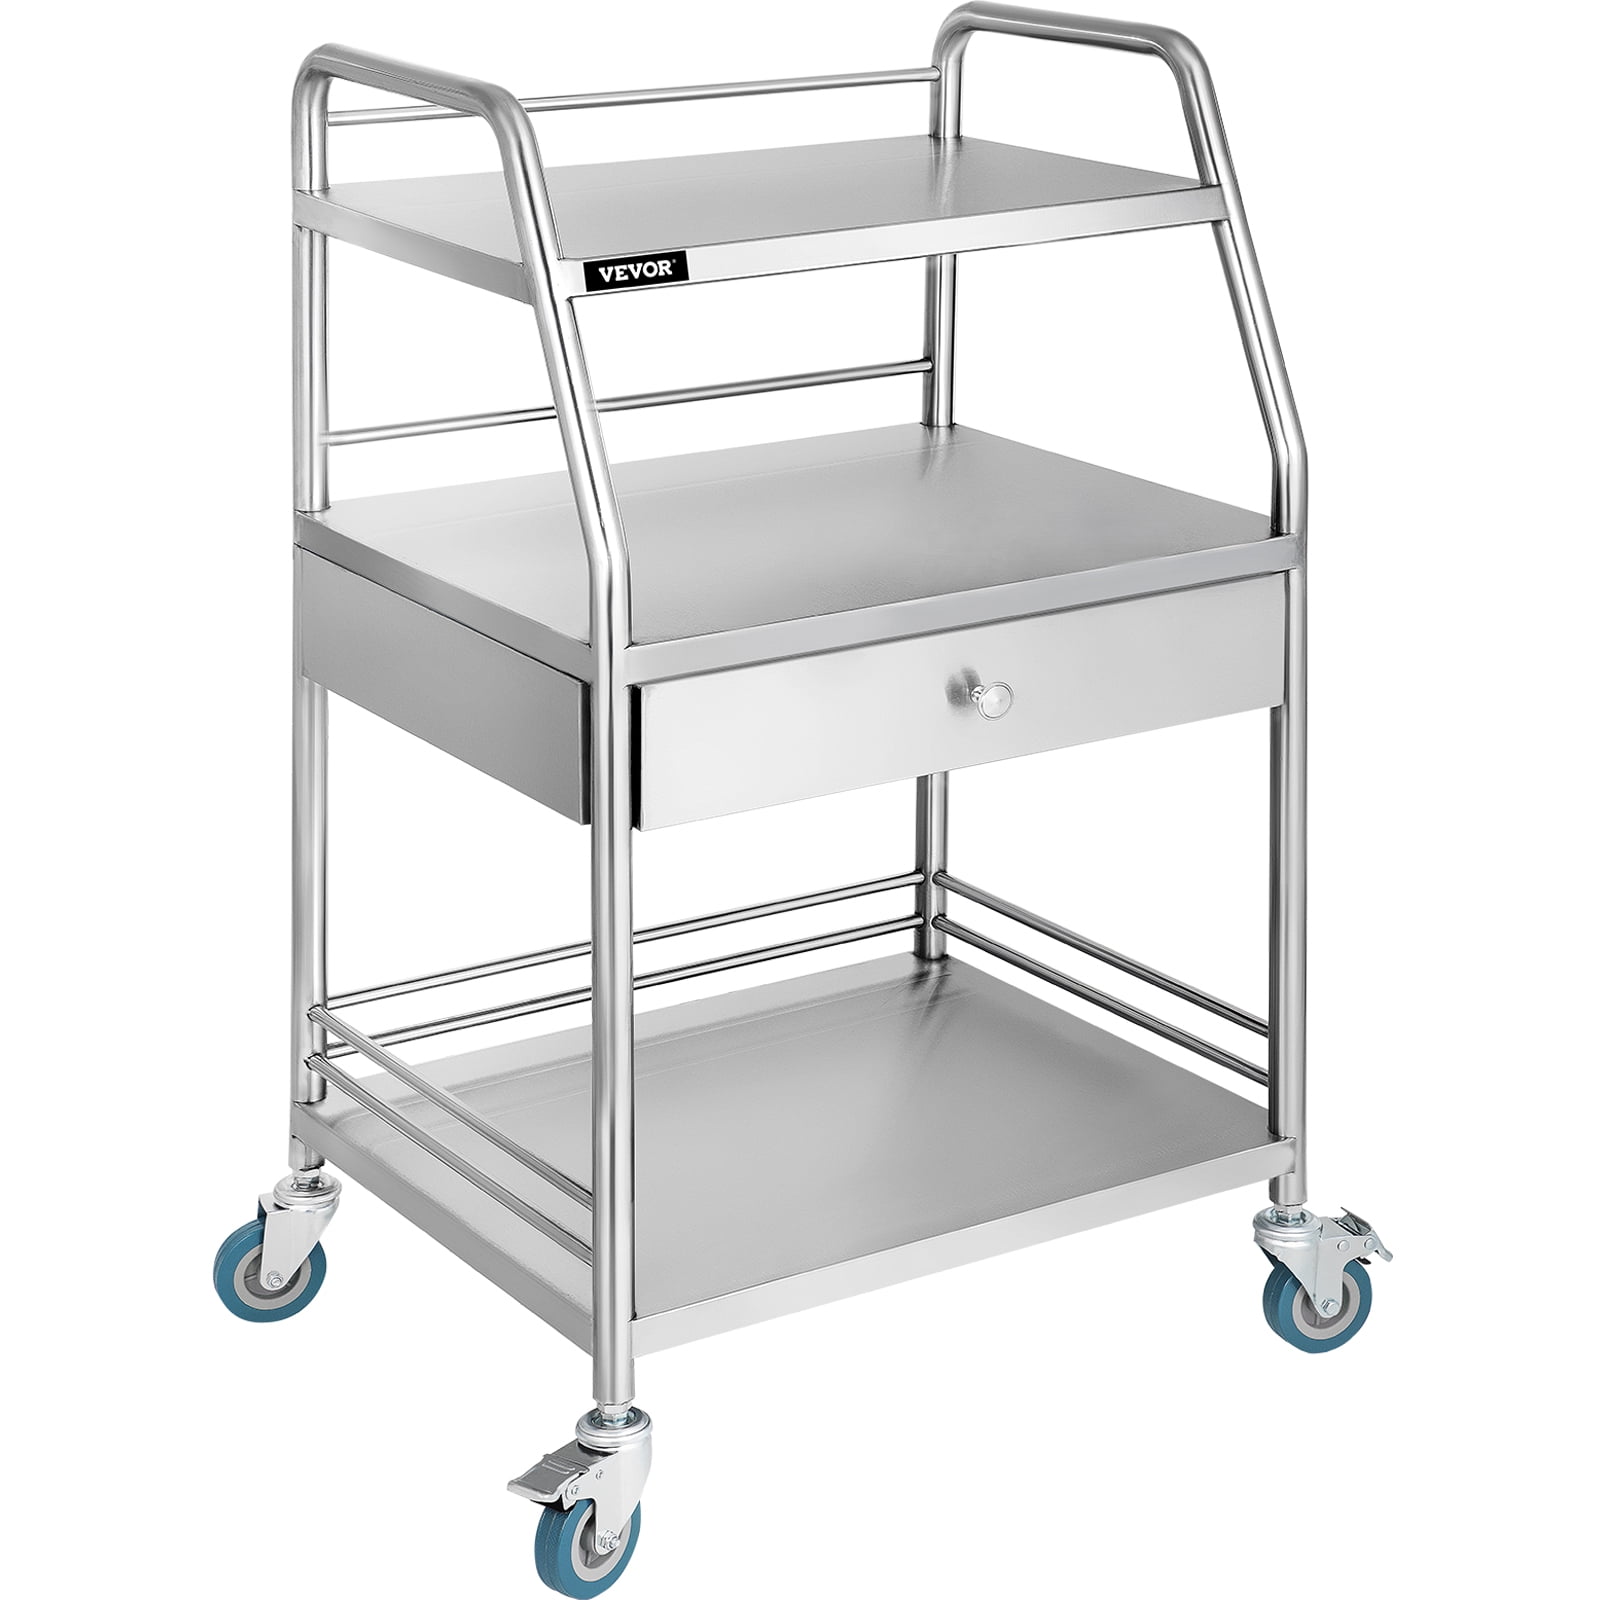 Small - 30 Legth x 16 Width Stainless Steel Dining Cart - 3 Shelf Heavy  Duty Utility Cart